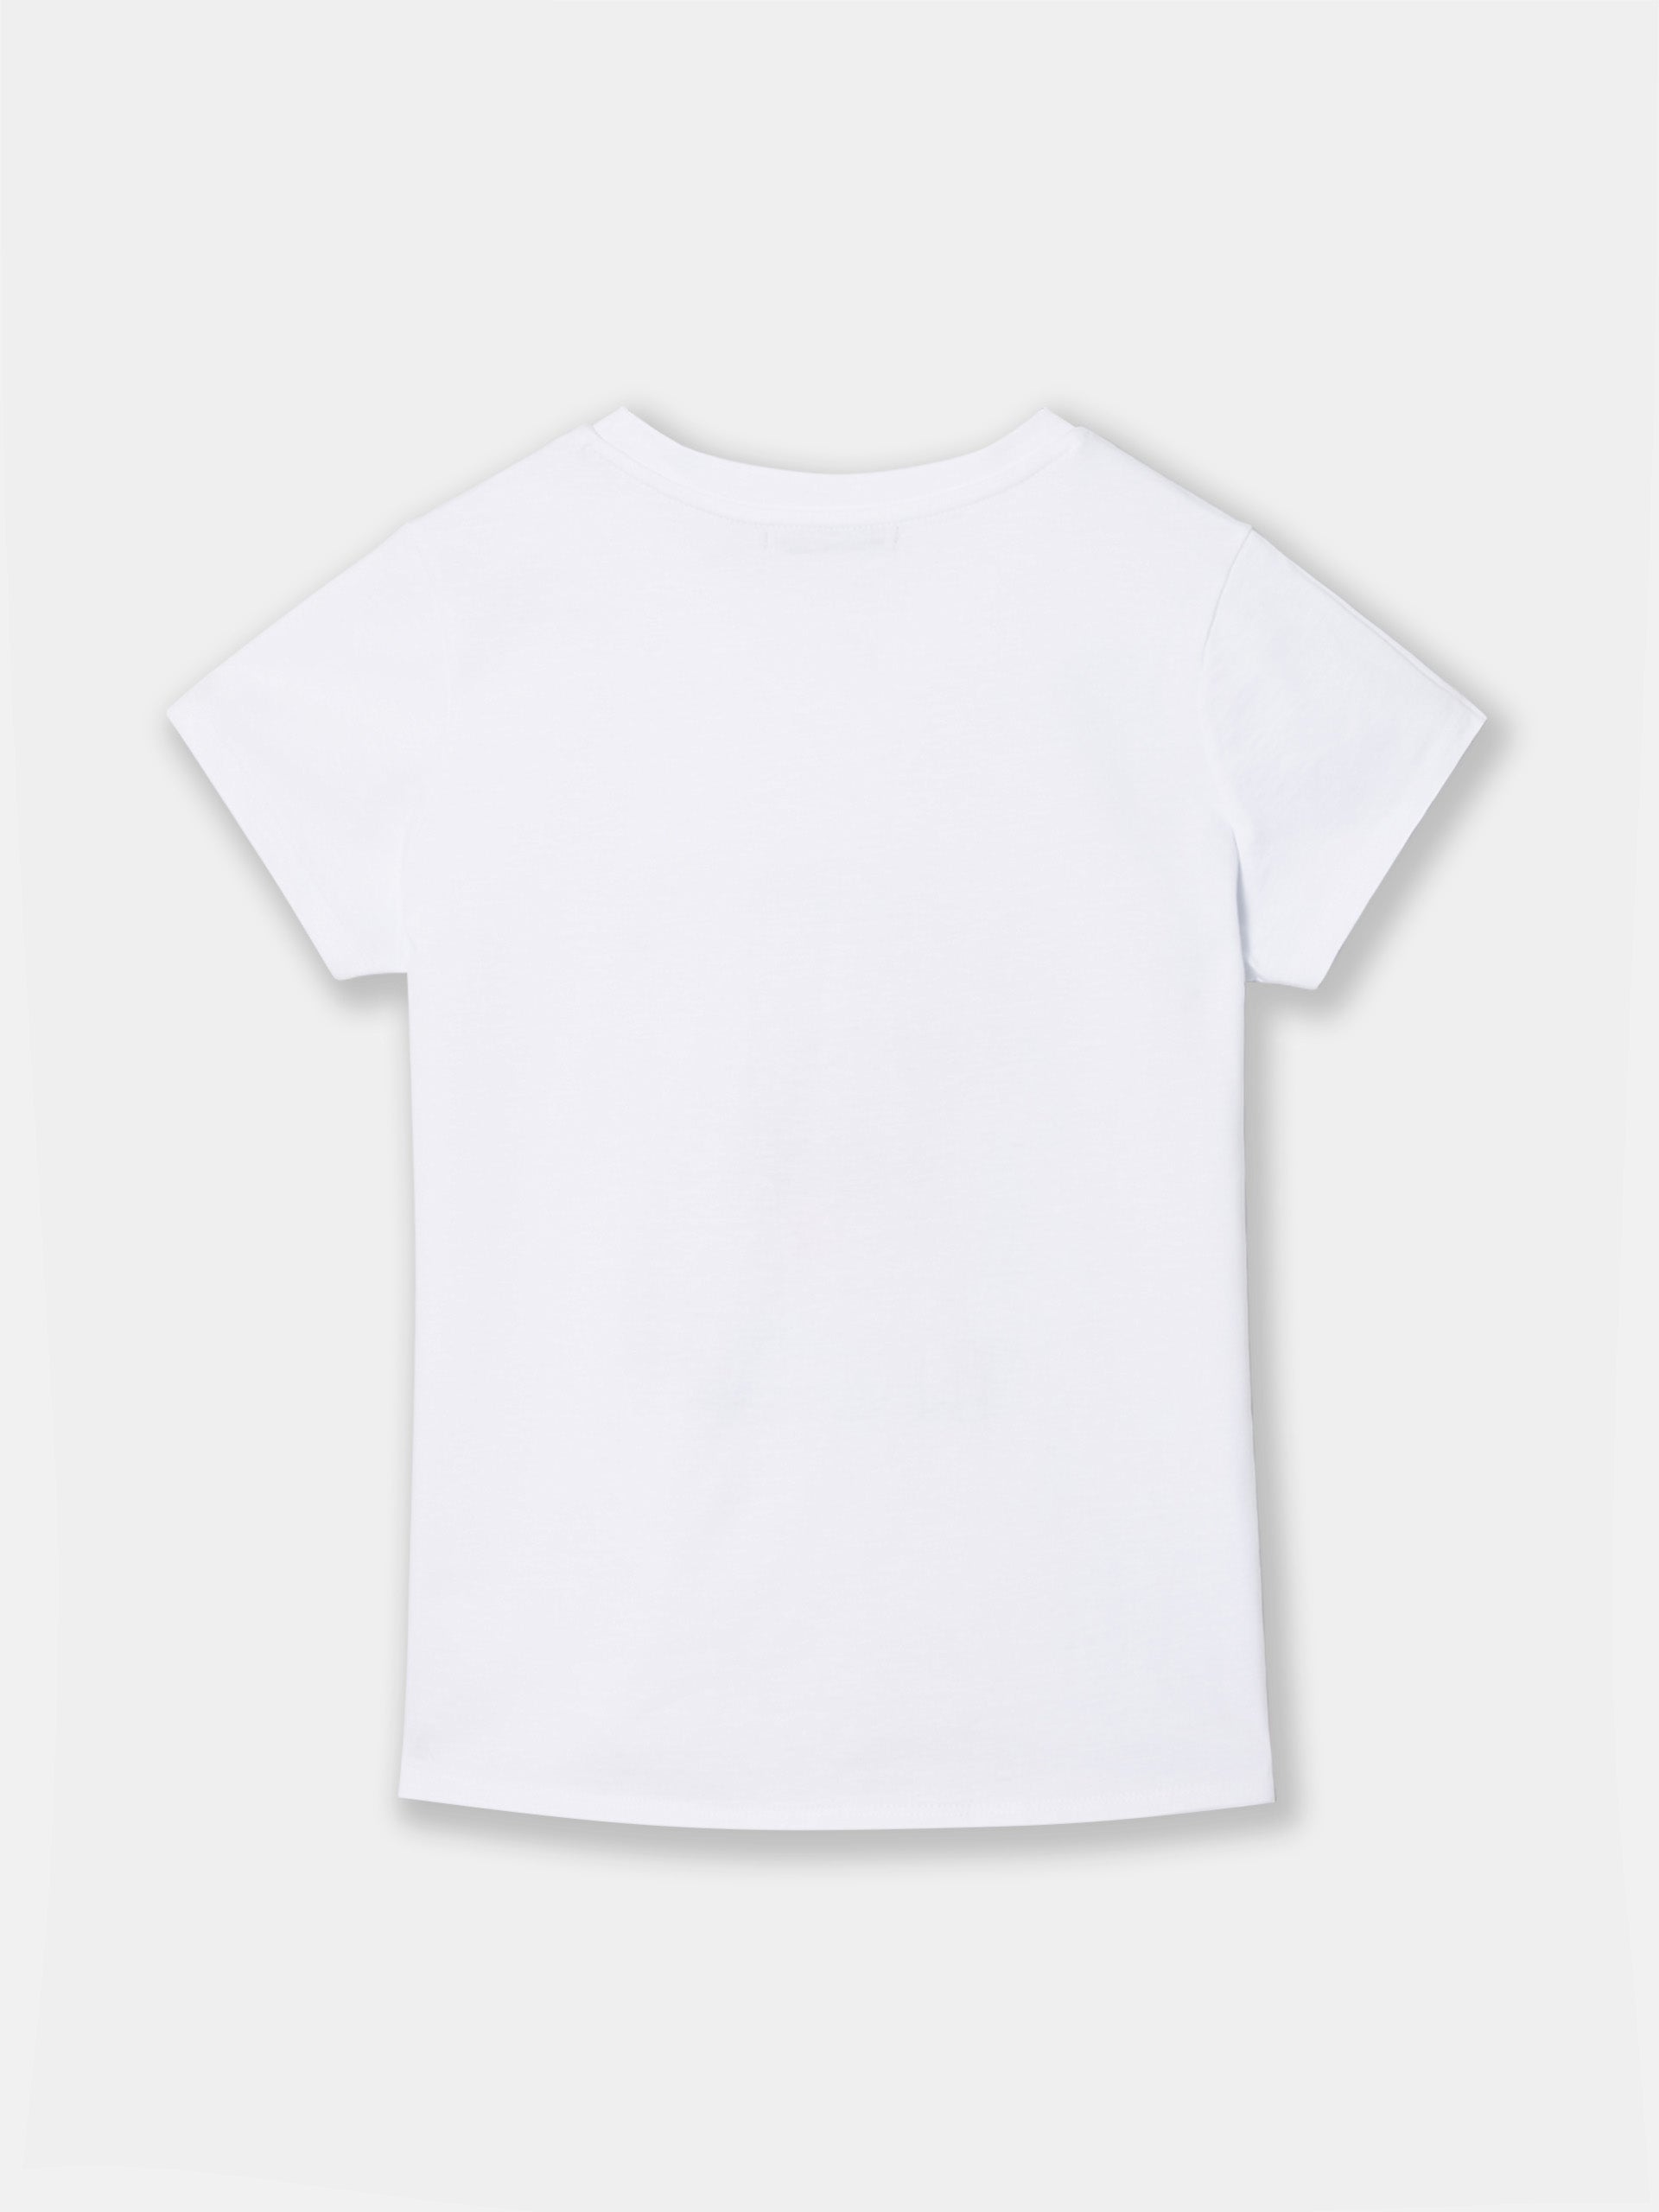 Camiseta woman estampada blanca